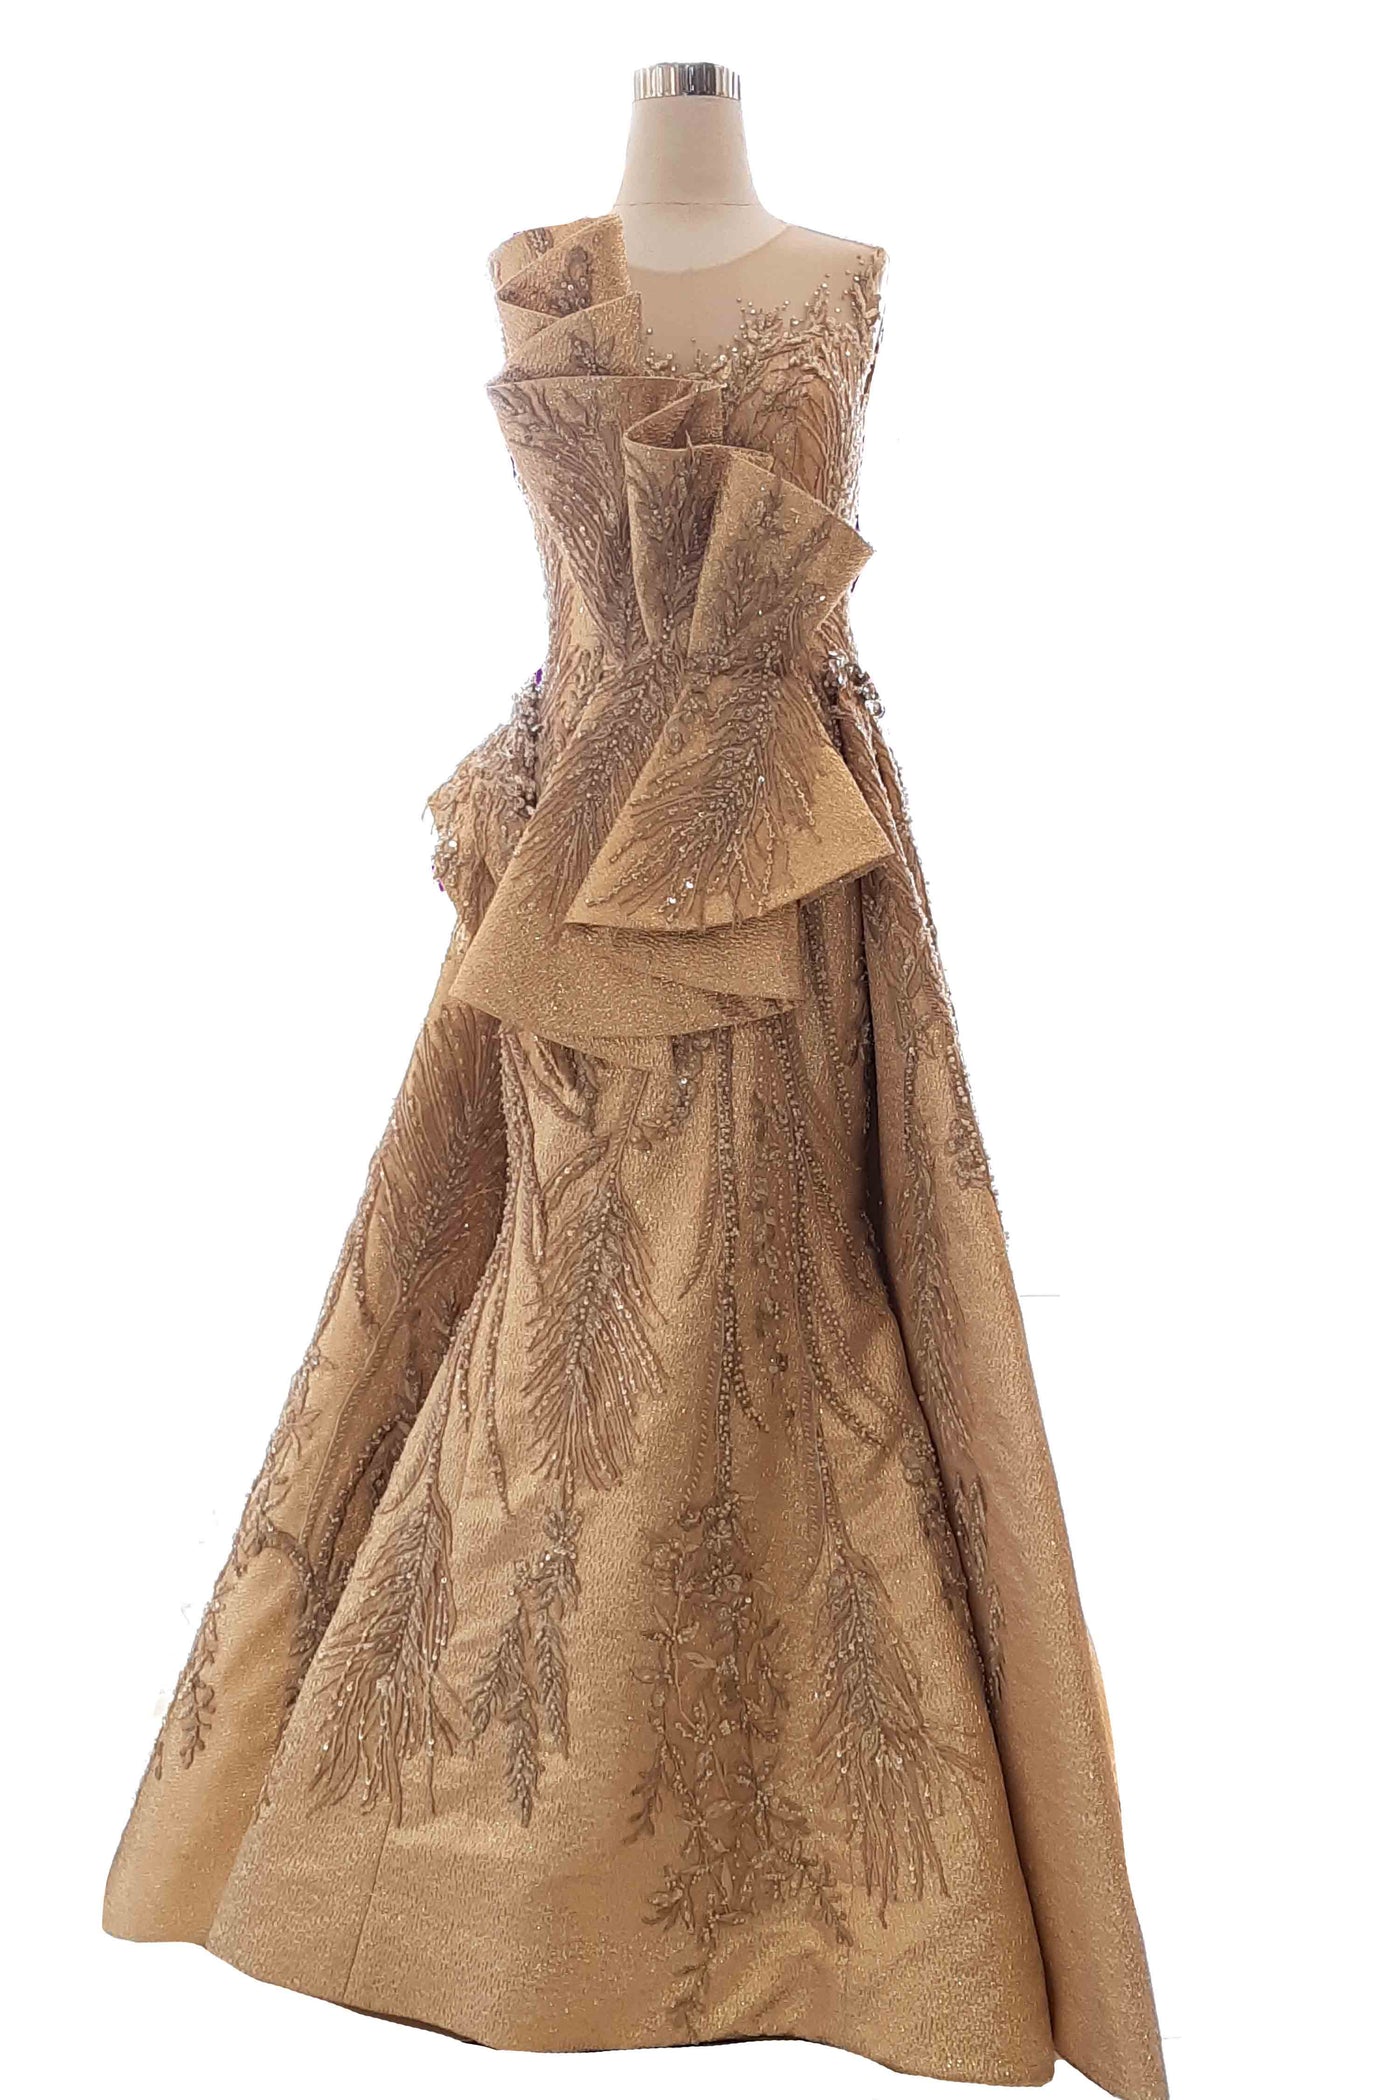 Buy : Winda Halomoan - Gold Ruffled Mermaid Gown With Train